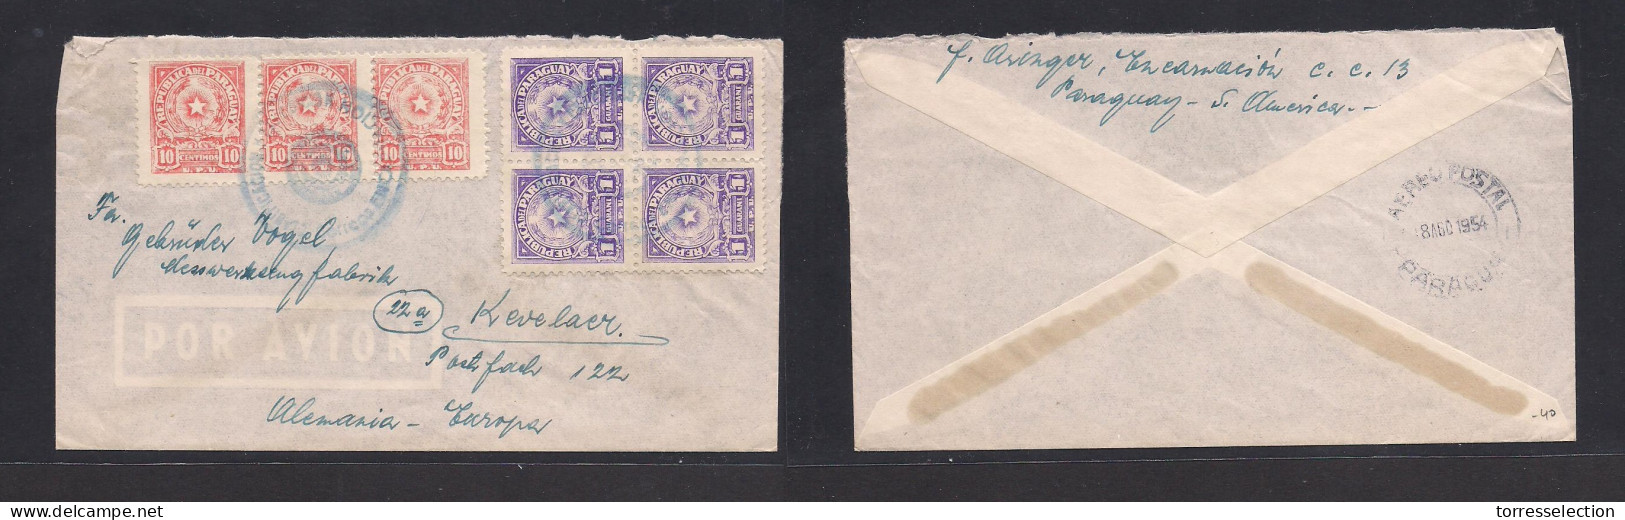 PARAGUAY. 1954 (18 Aug) Encarnación - Germany, Kevelaer. Multifkd Env, Special Provisional Lilac Cachet. Interesting Mul - Paraguay